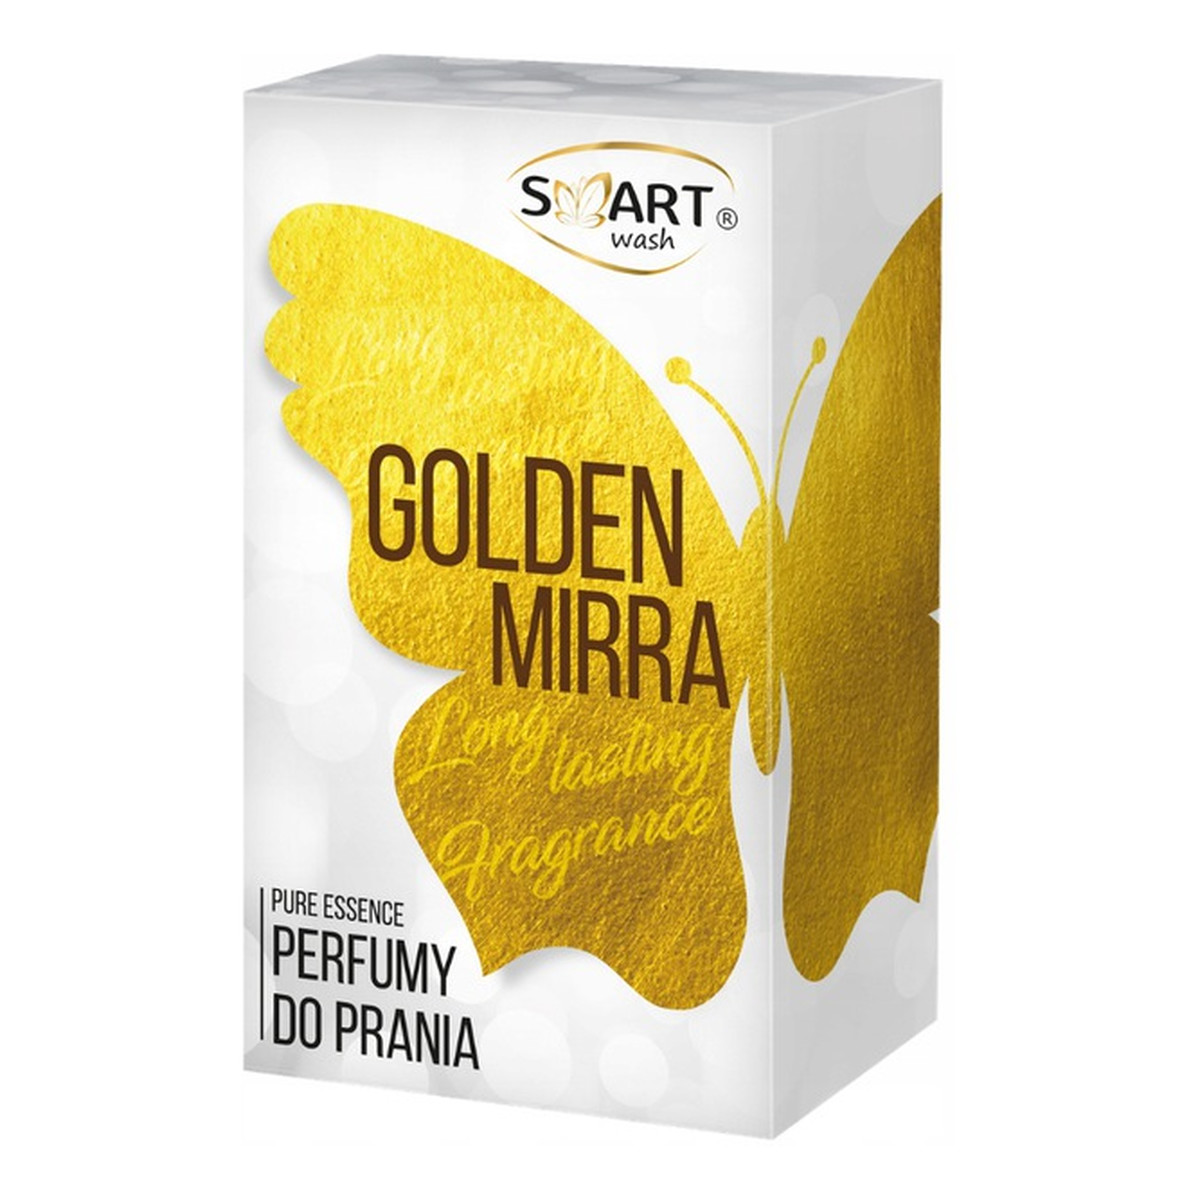 Smart Wash Perfumy do prania Golden Mirra 100ml